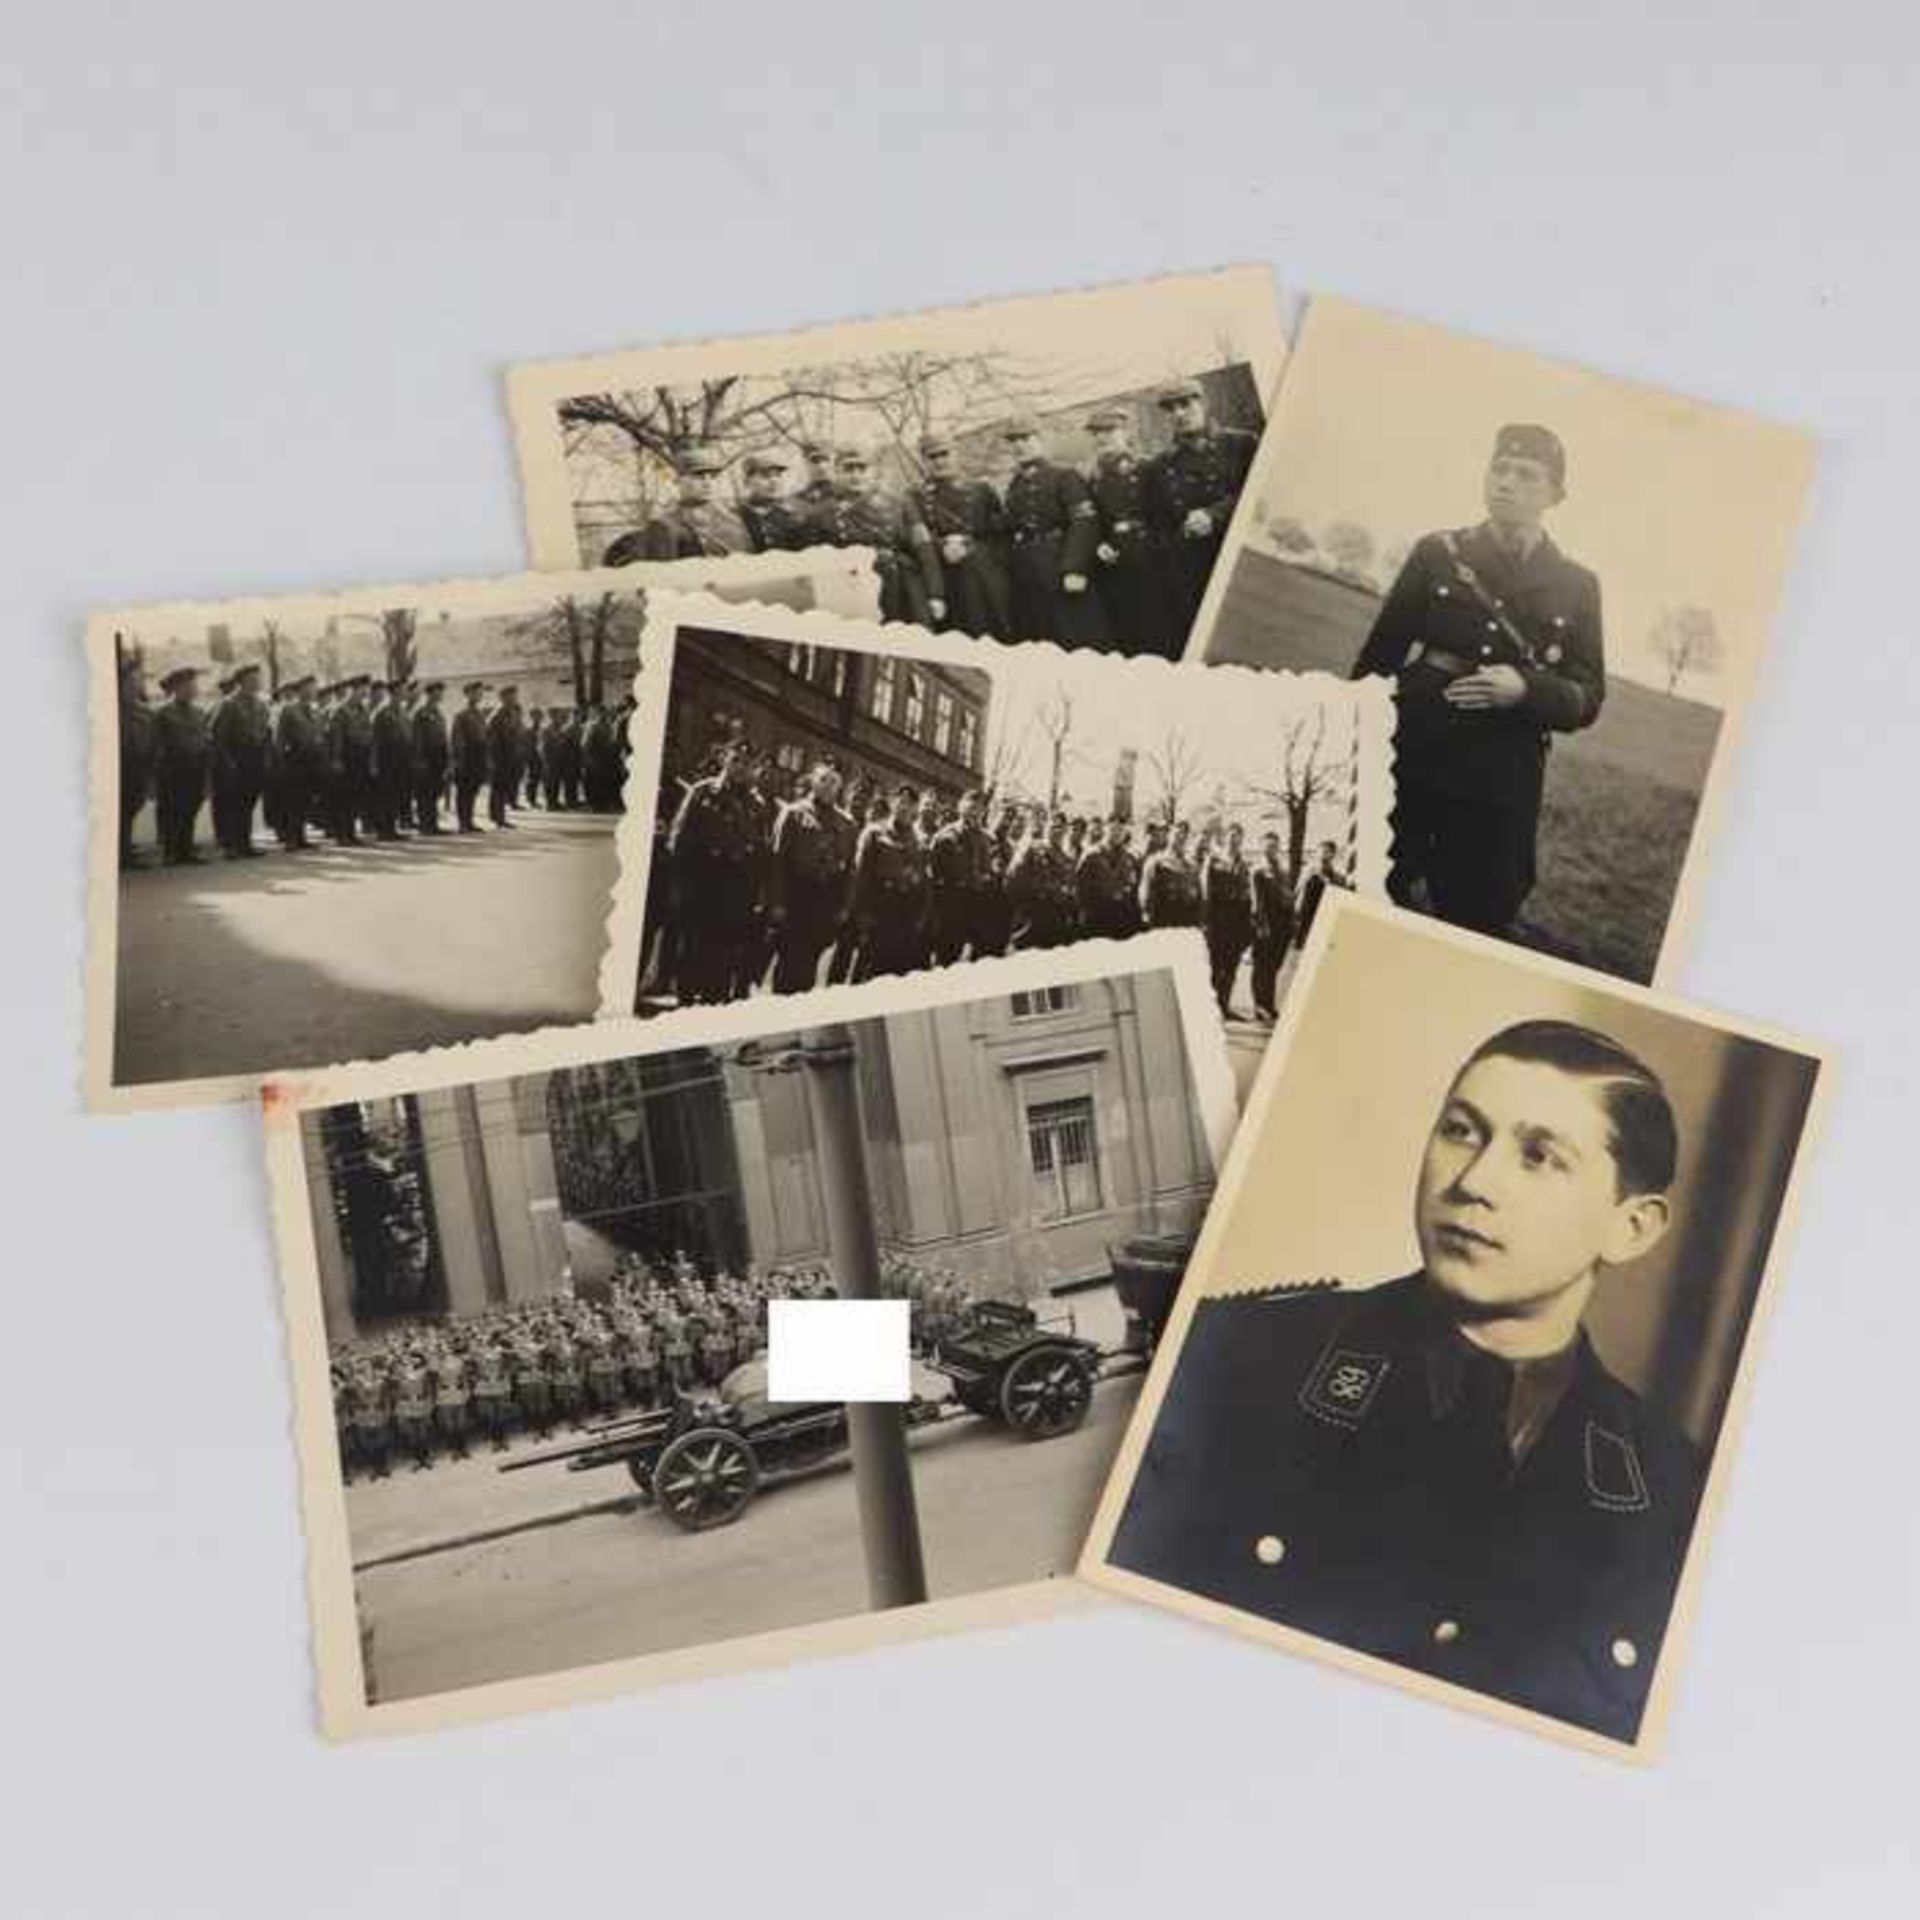 Fotografien - Waffen-XX6 St., private Aufnahmen v. XX- u. SA-Männer in Uniformen, als Porträt- u.